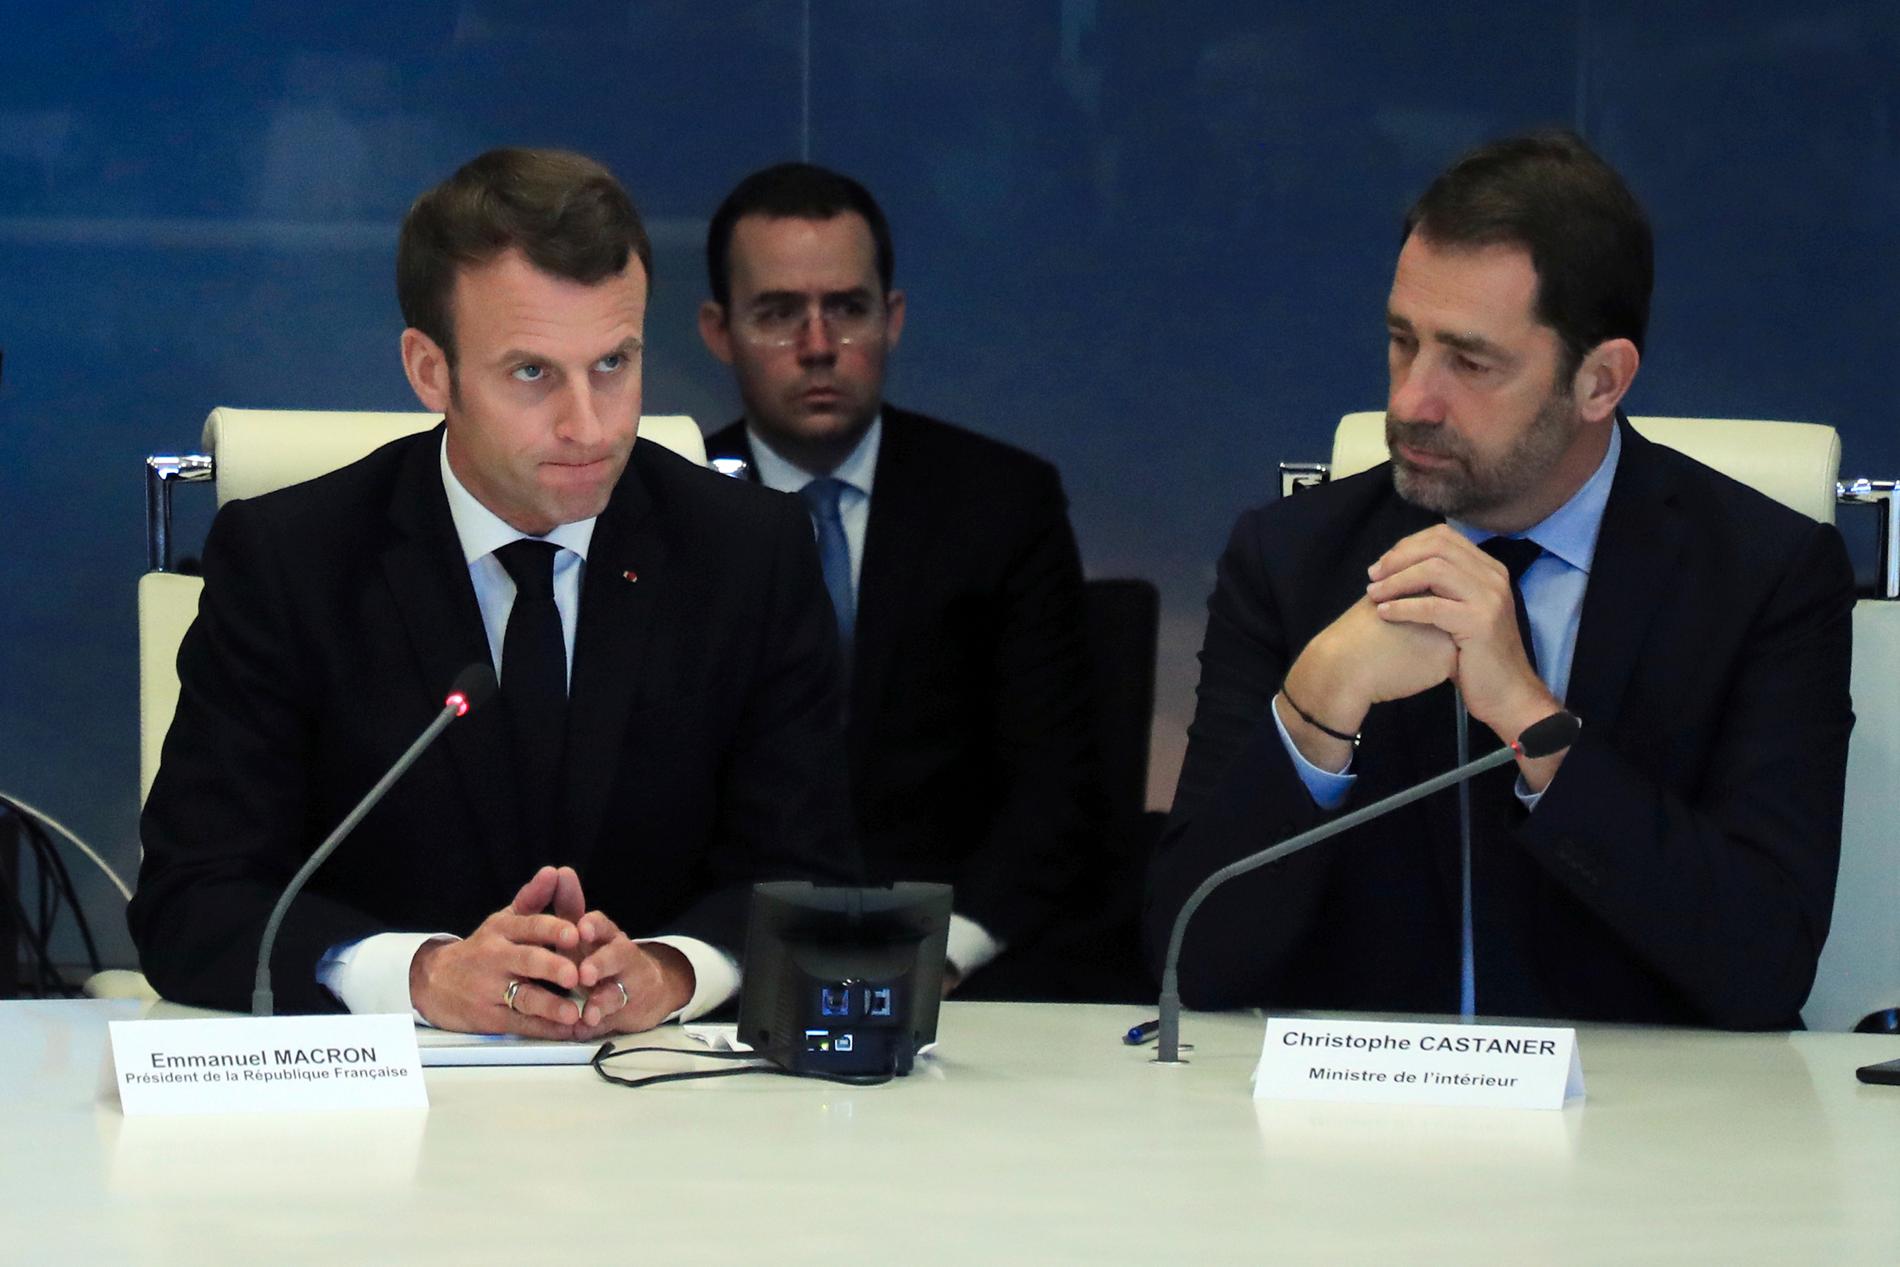 Frankrikes president Emmanuel Macron och inrikesminister Christophe Castaner i krismöte med anledning av lördagens protester.